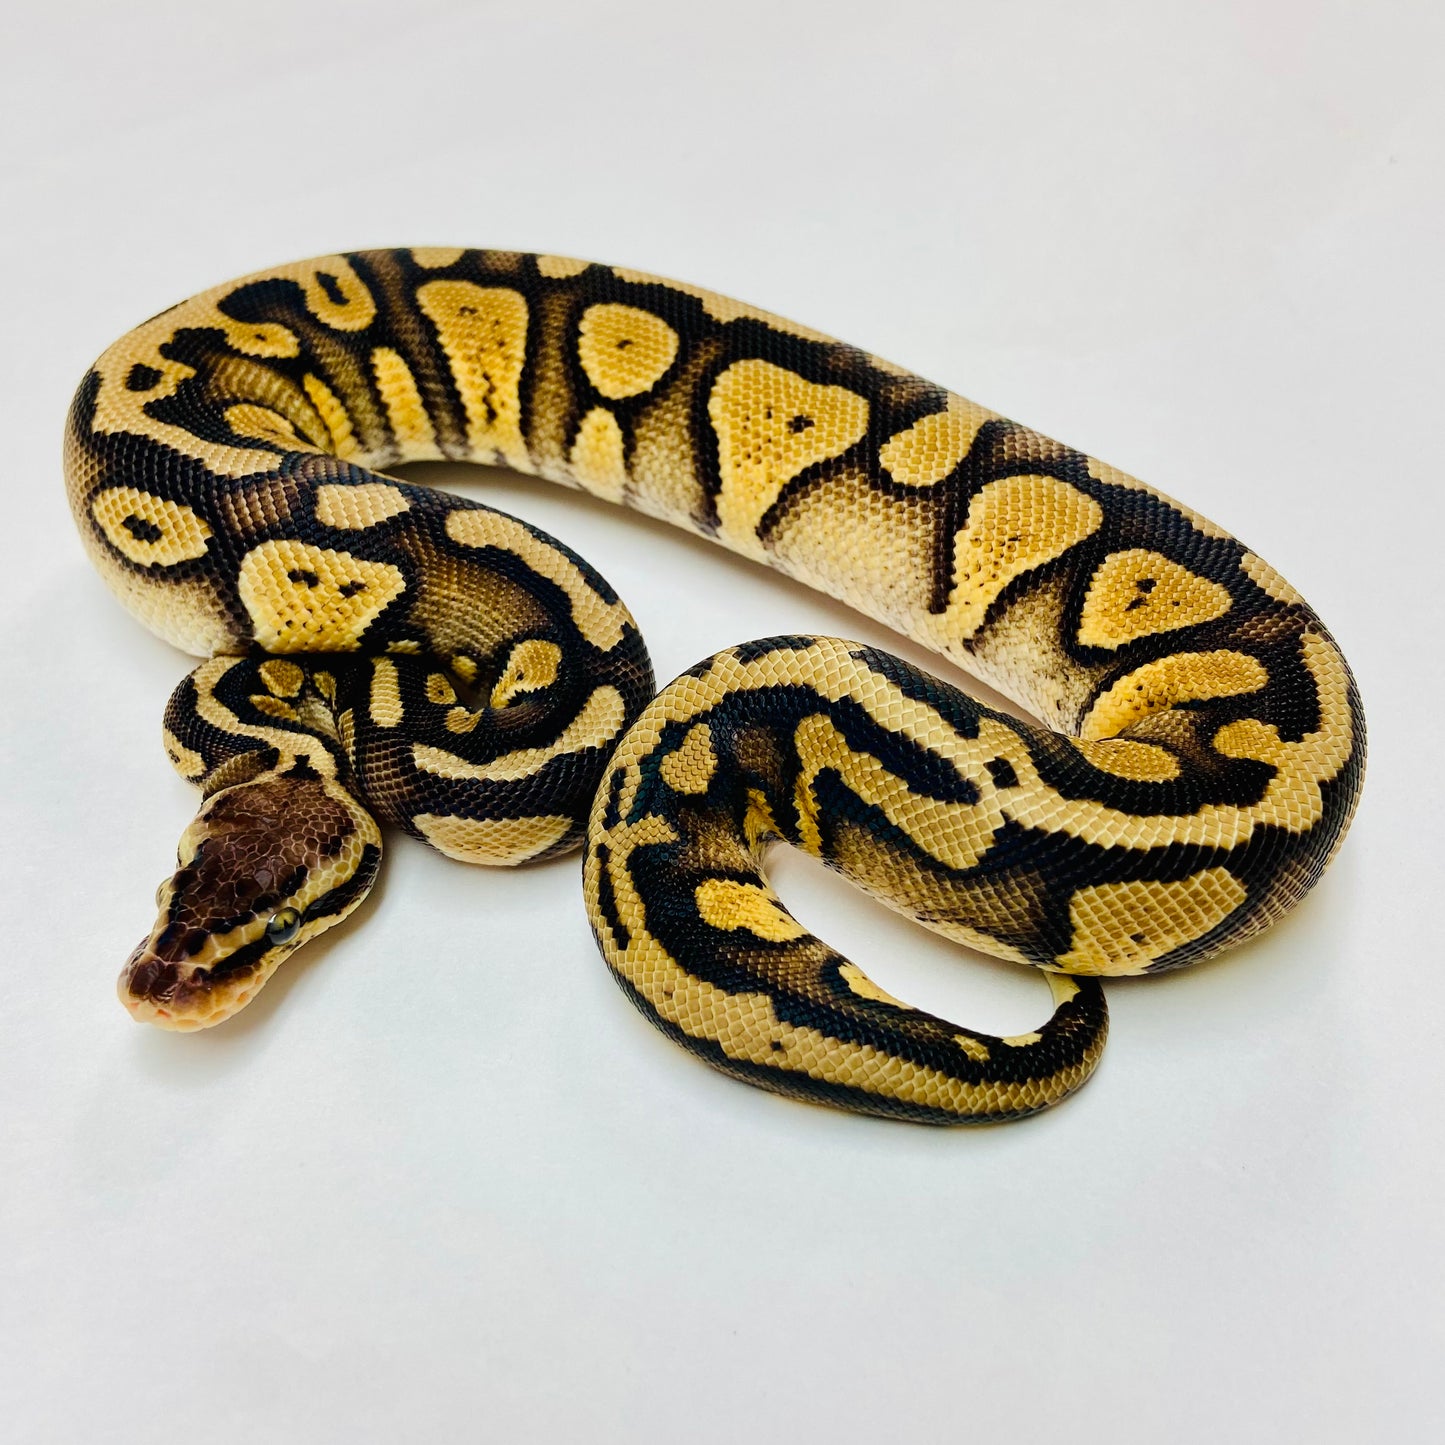 Pastel Mahogany Het Pied Ball Python- Male #2023M01